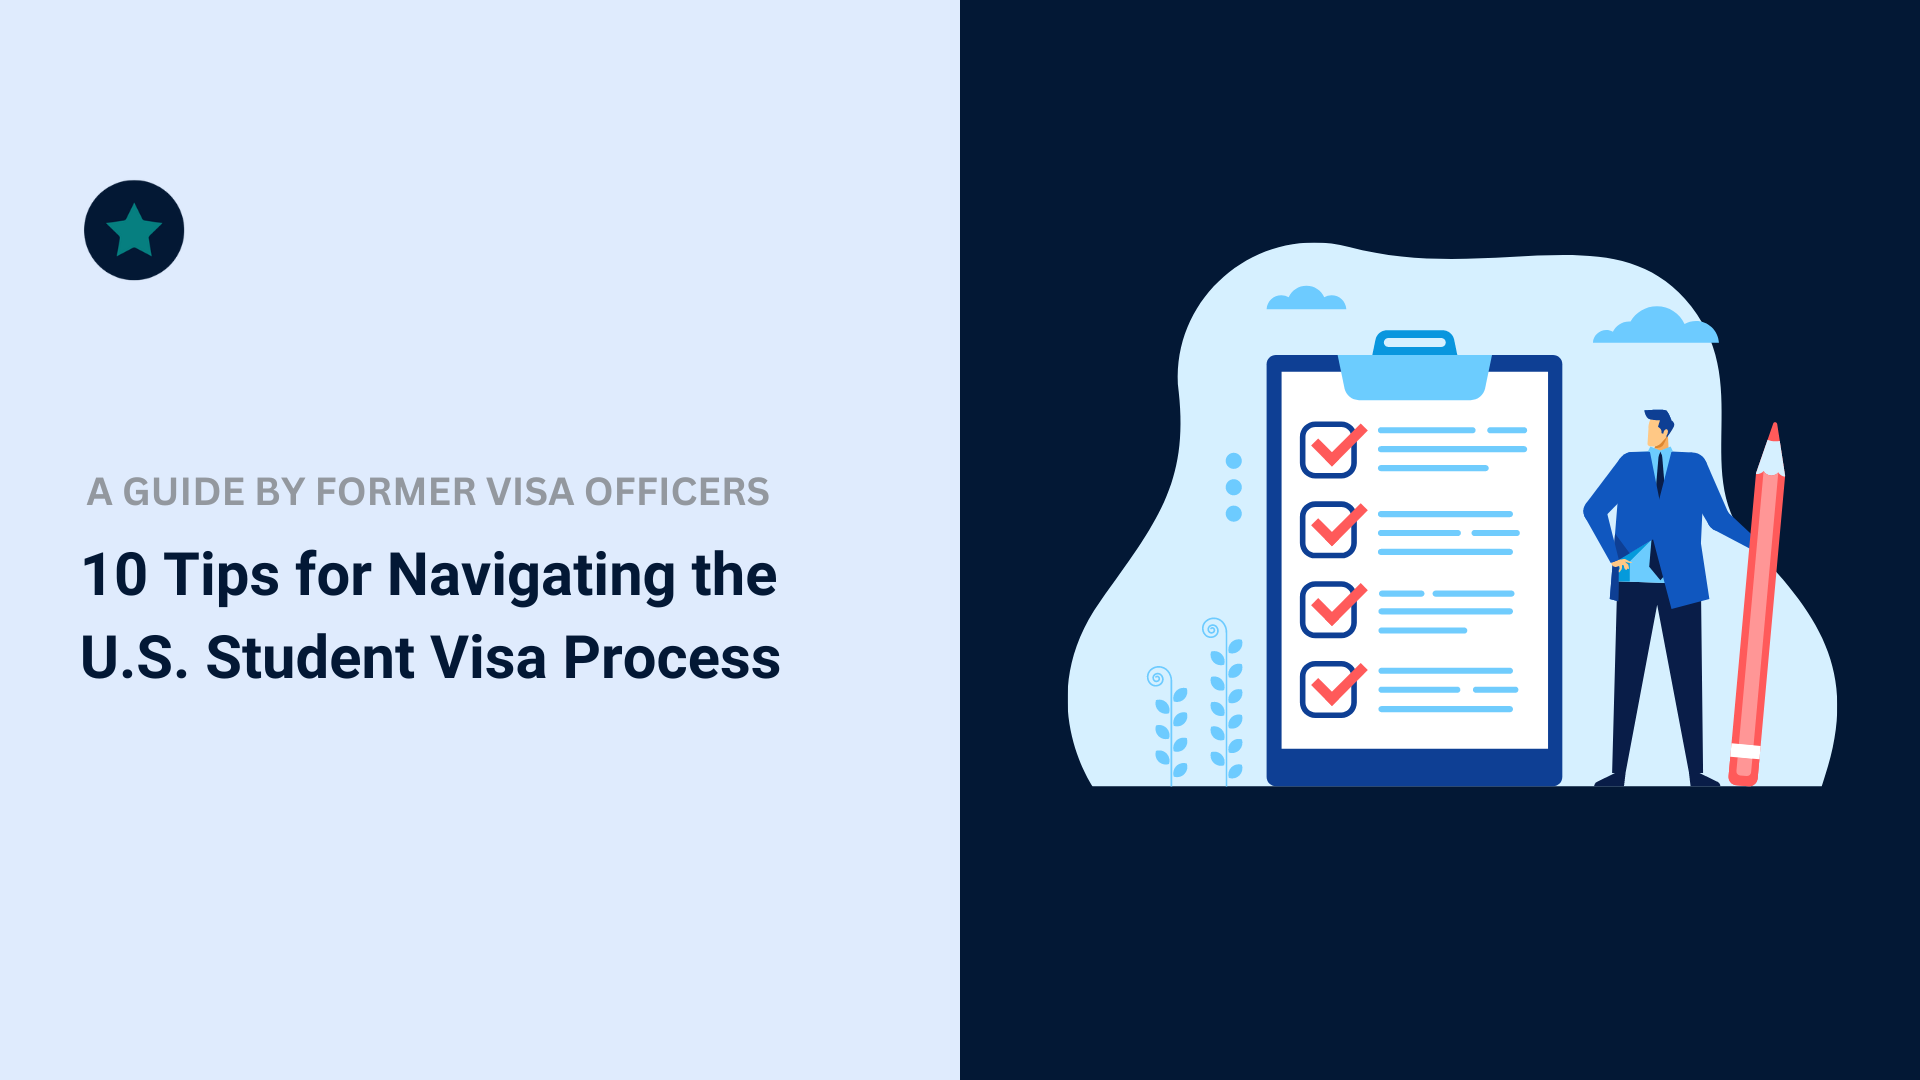 10 Tips for Navigating the U.S. Student Visa Process